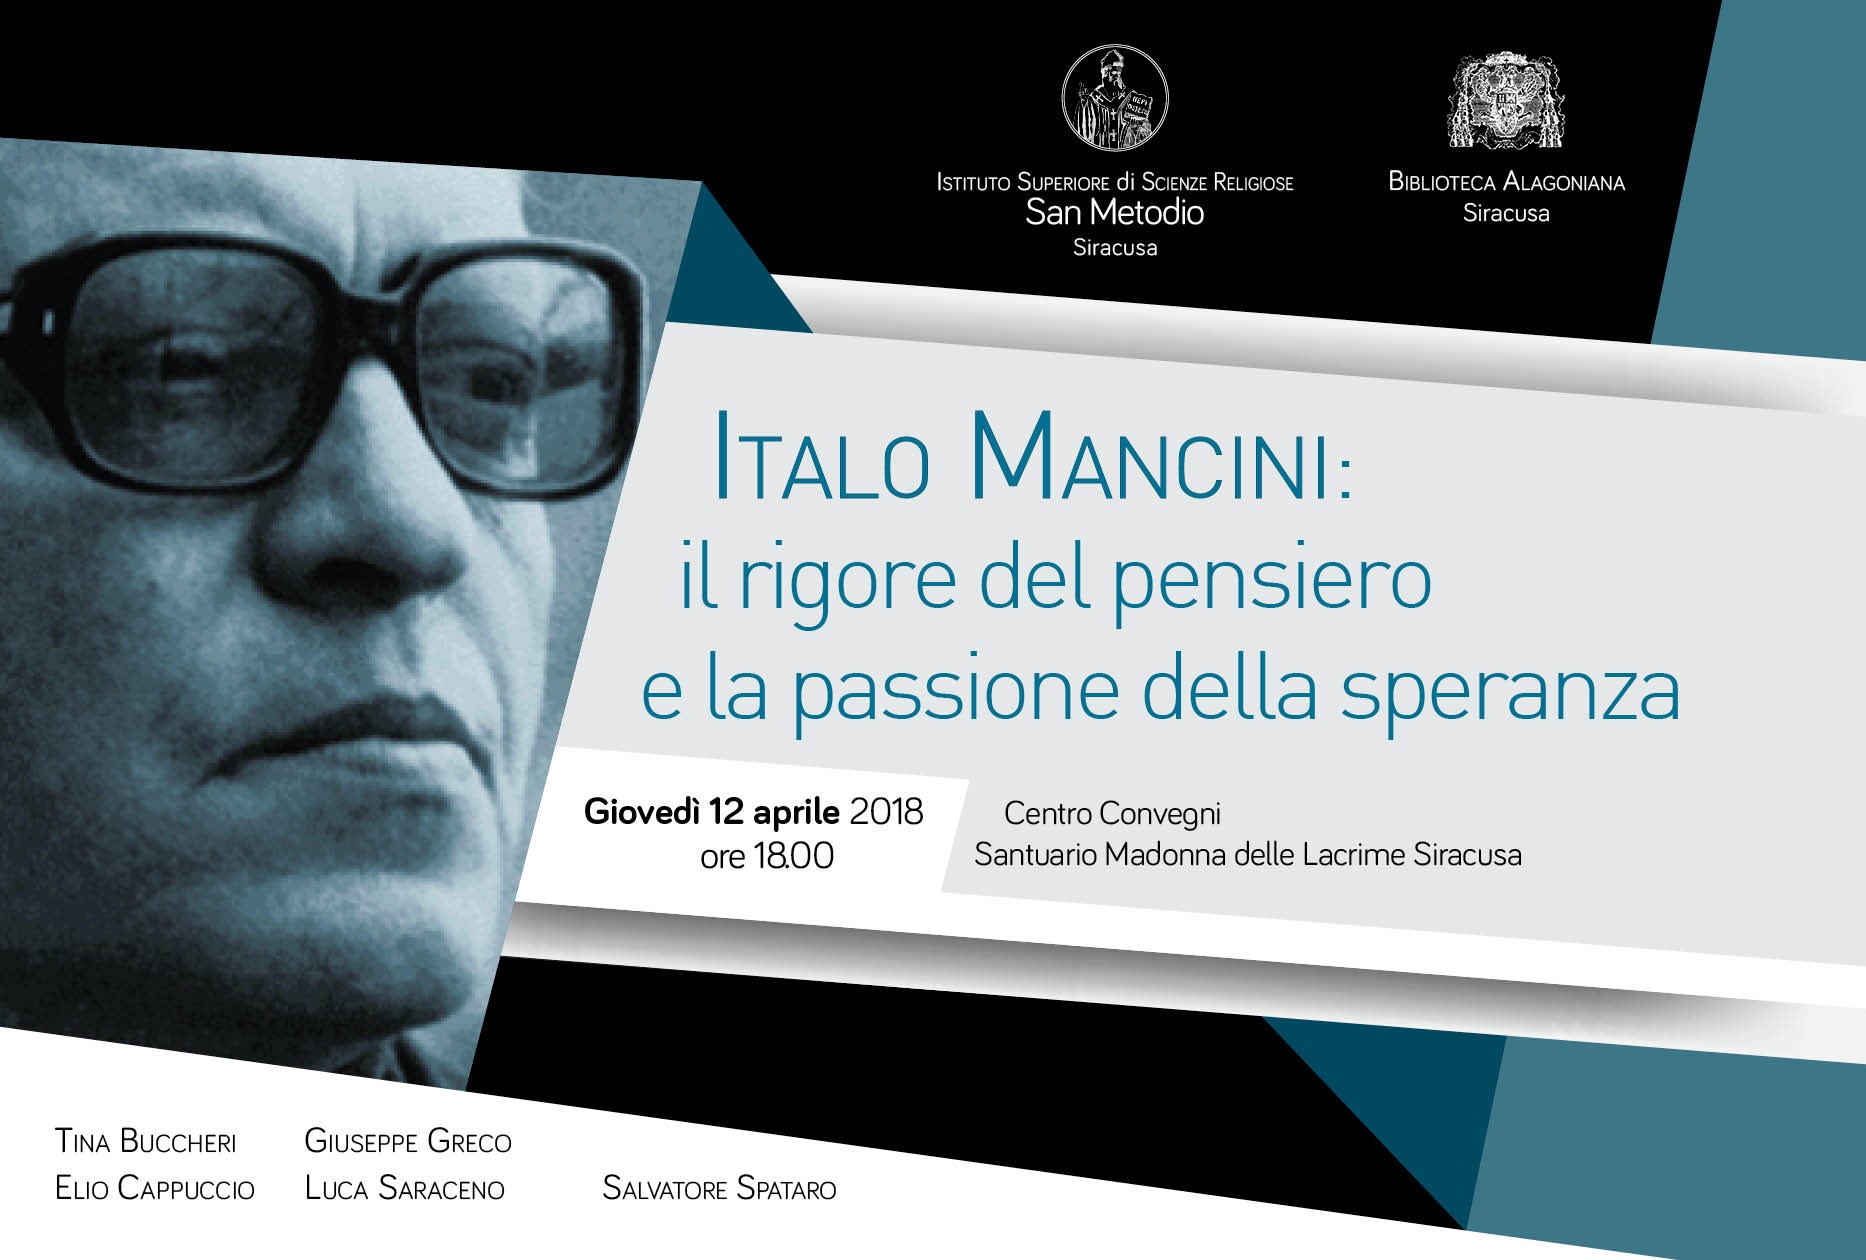 ISSR SM Italo Mancini 12.4.18 invito web.jpg